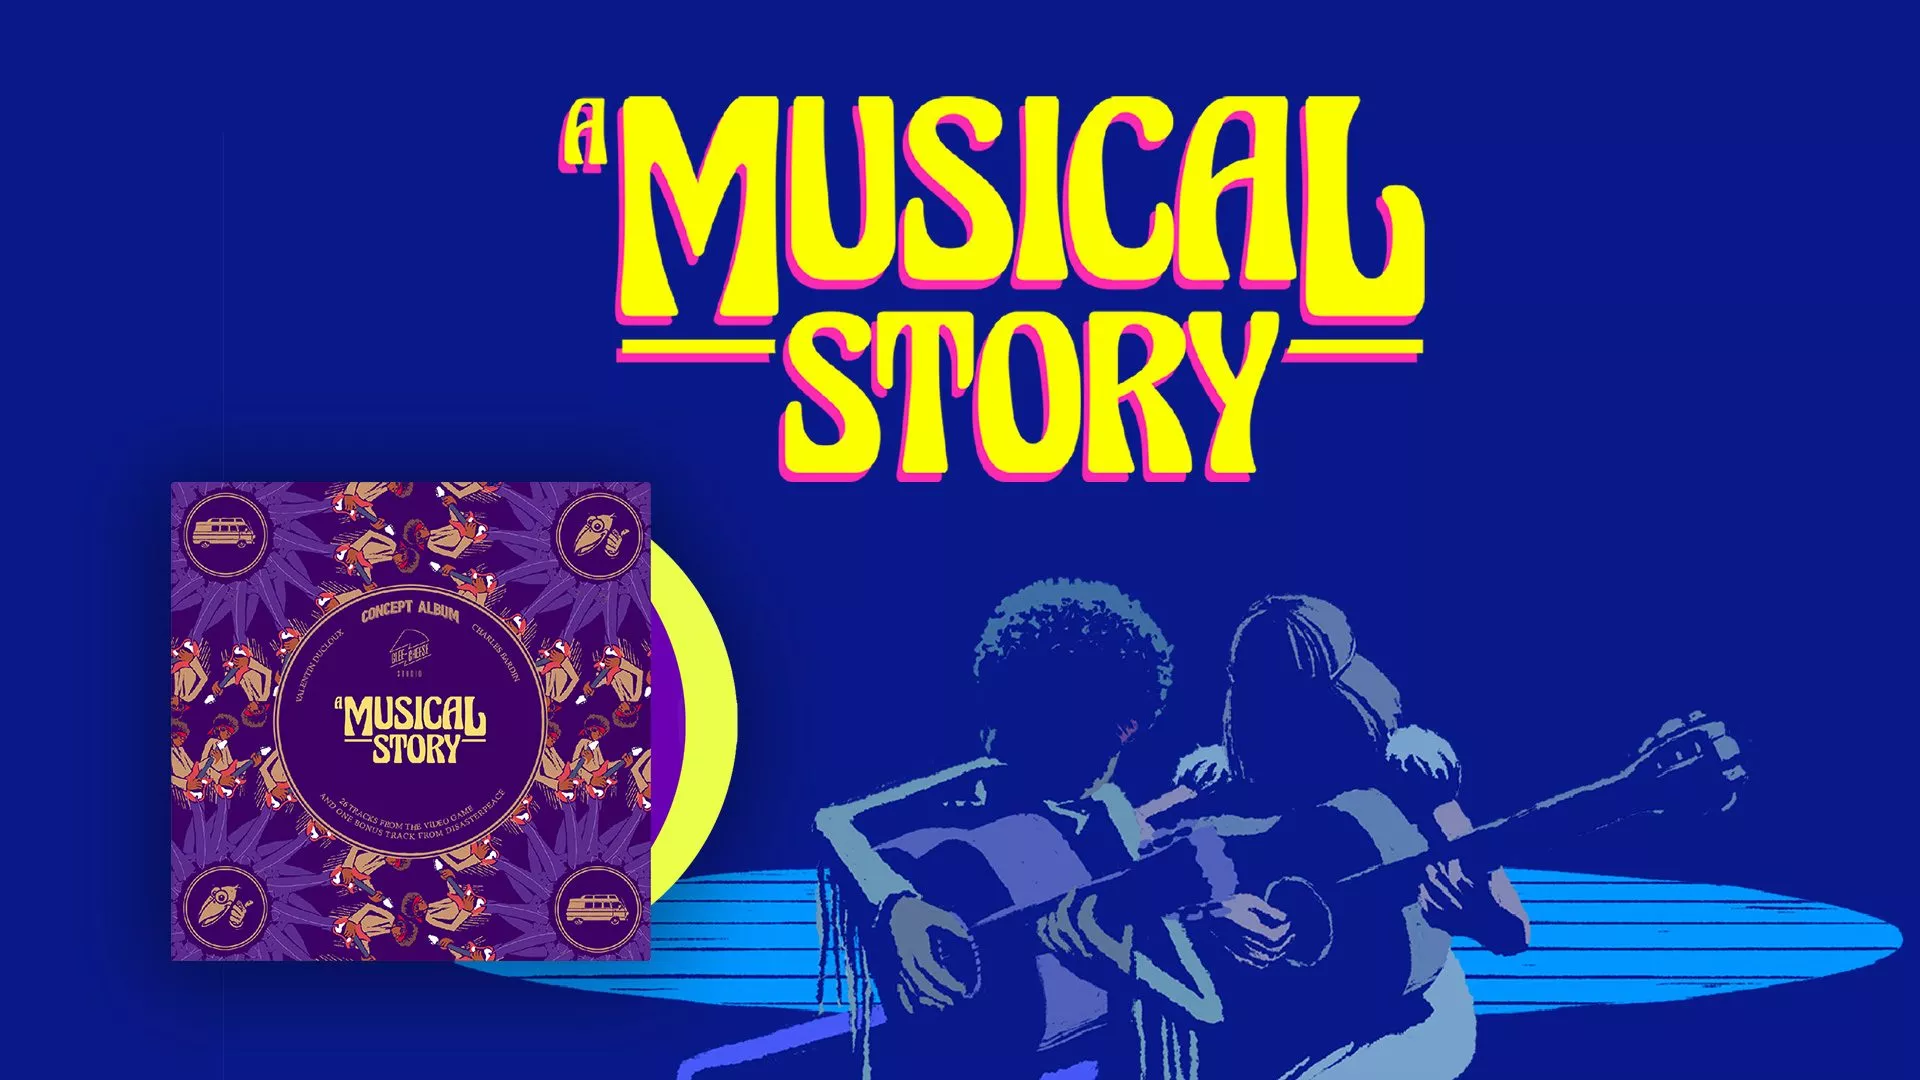 A musical story vinyl 3